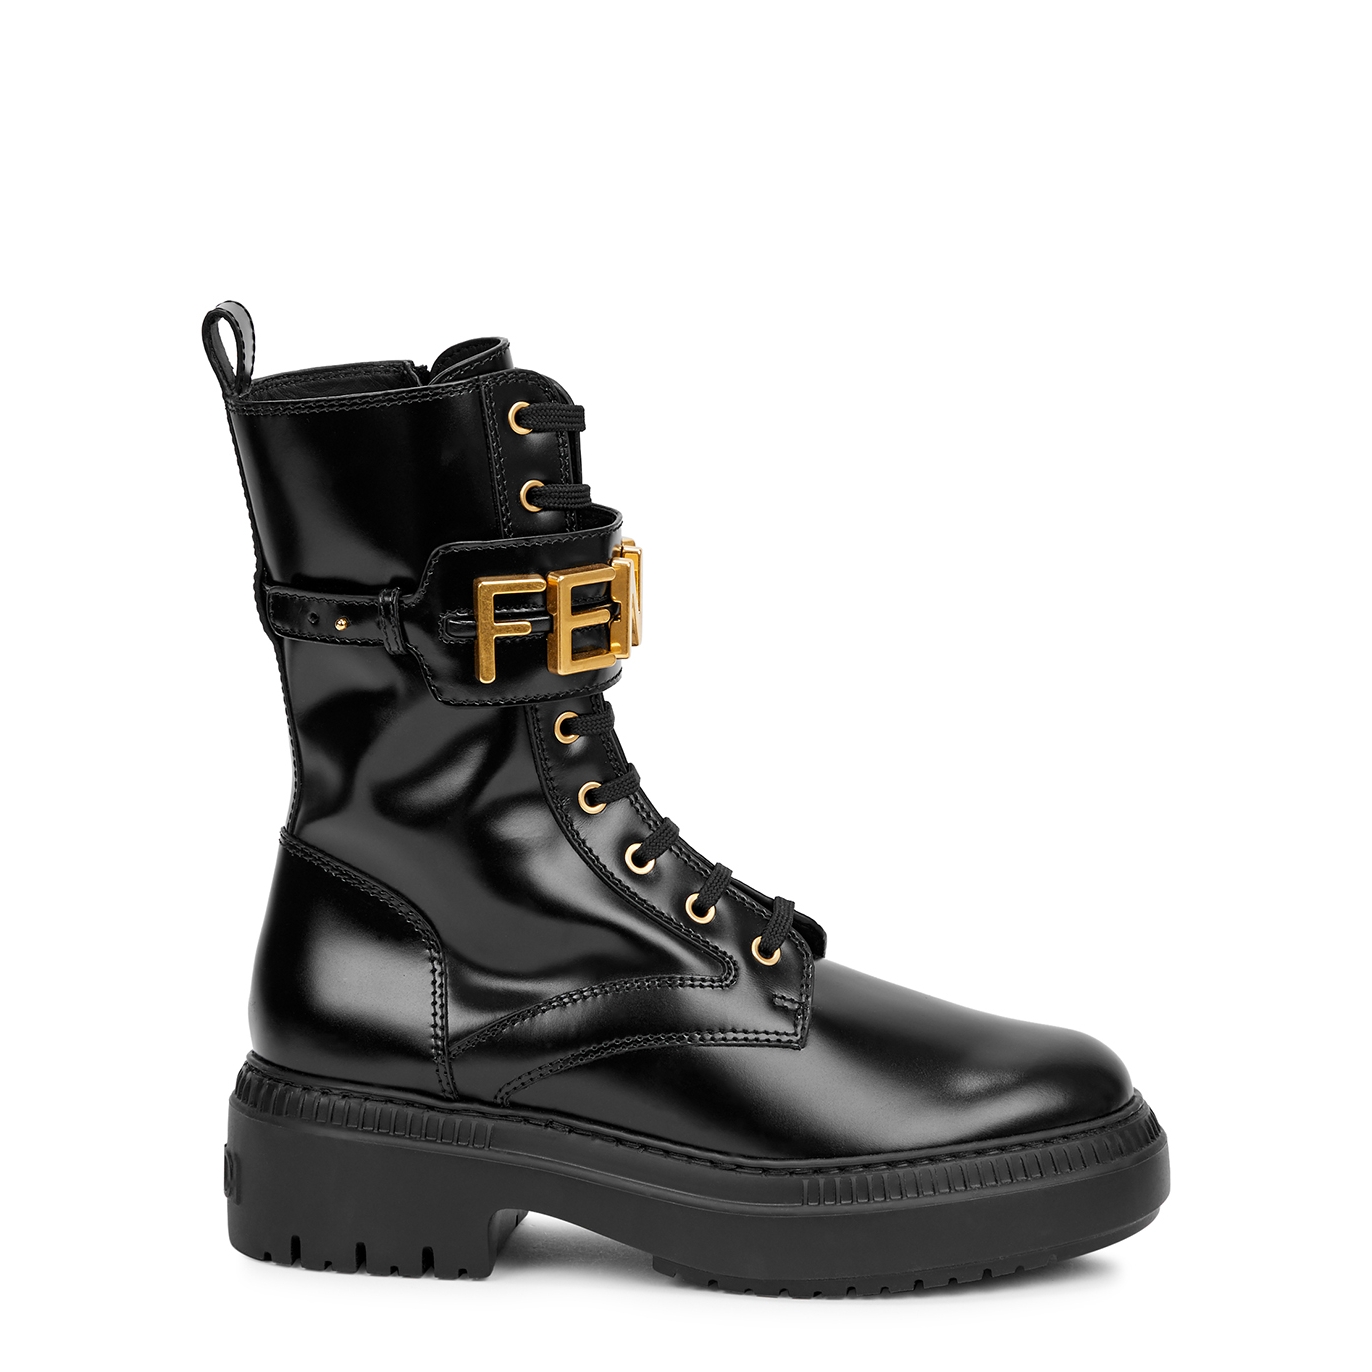 Fendi Fendigraphy logo leather combat boots - Harvey Nichols